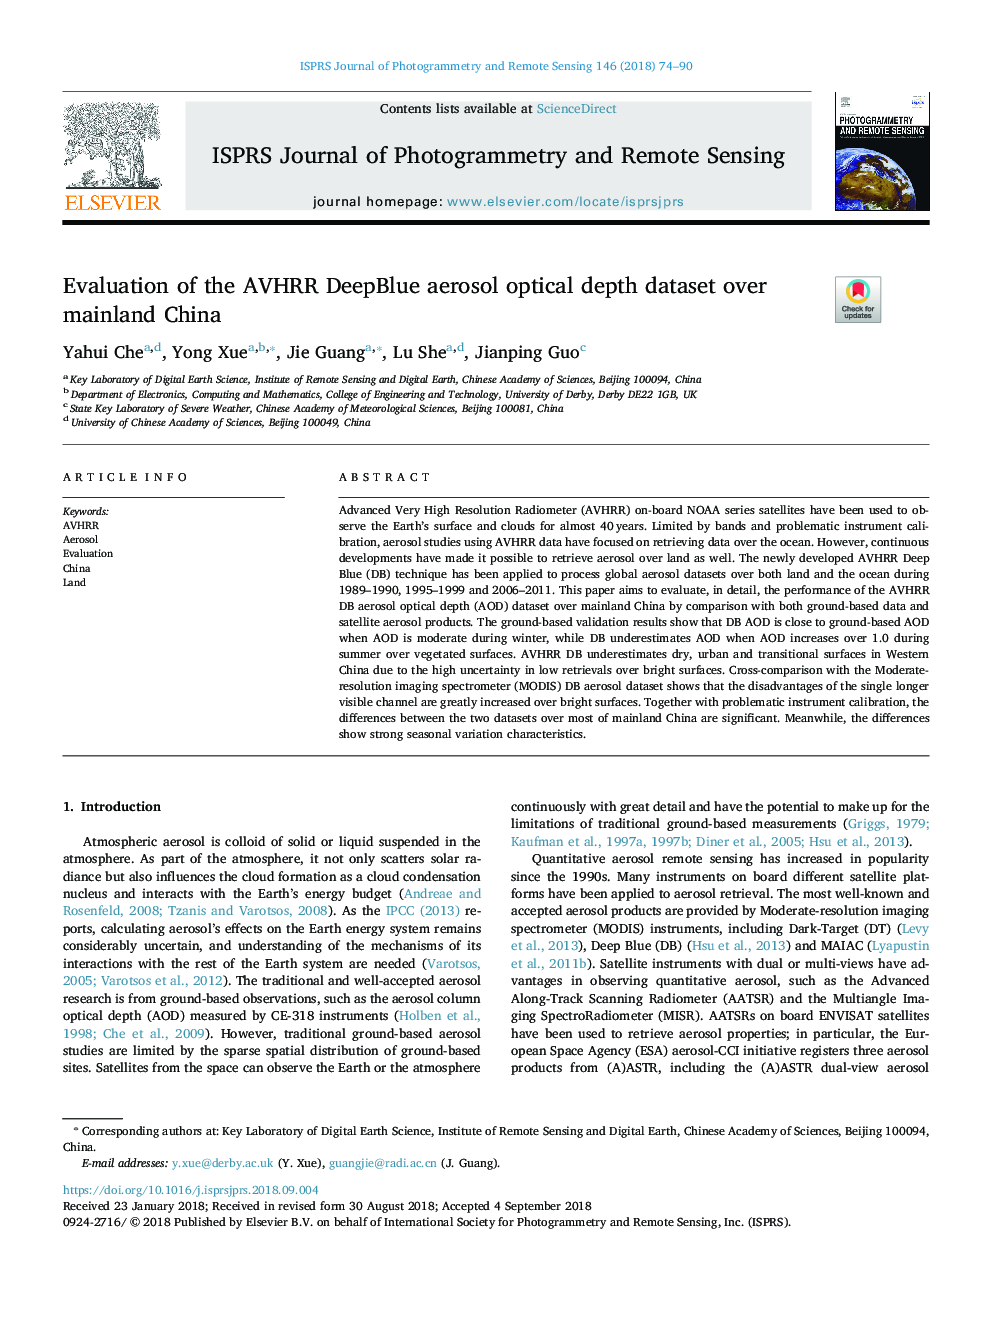 Evaluation of the AVHRR DeepBlue aerosol optical depth dataset over mainland China